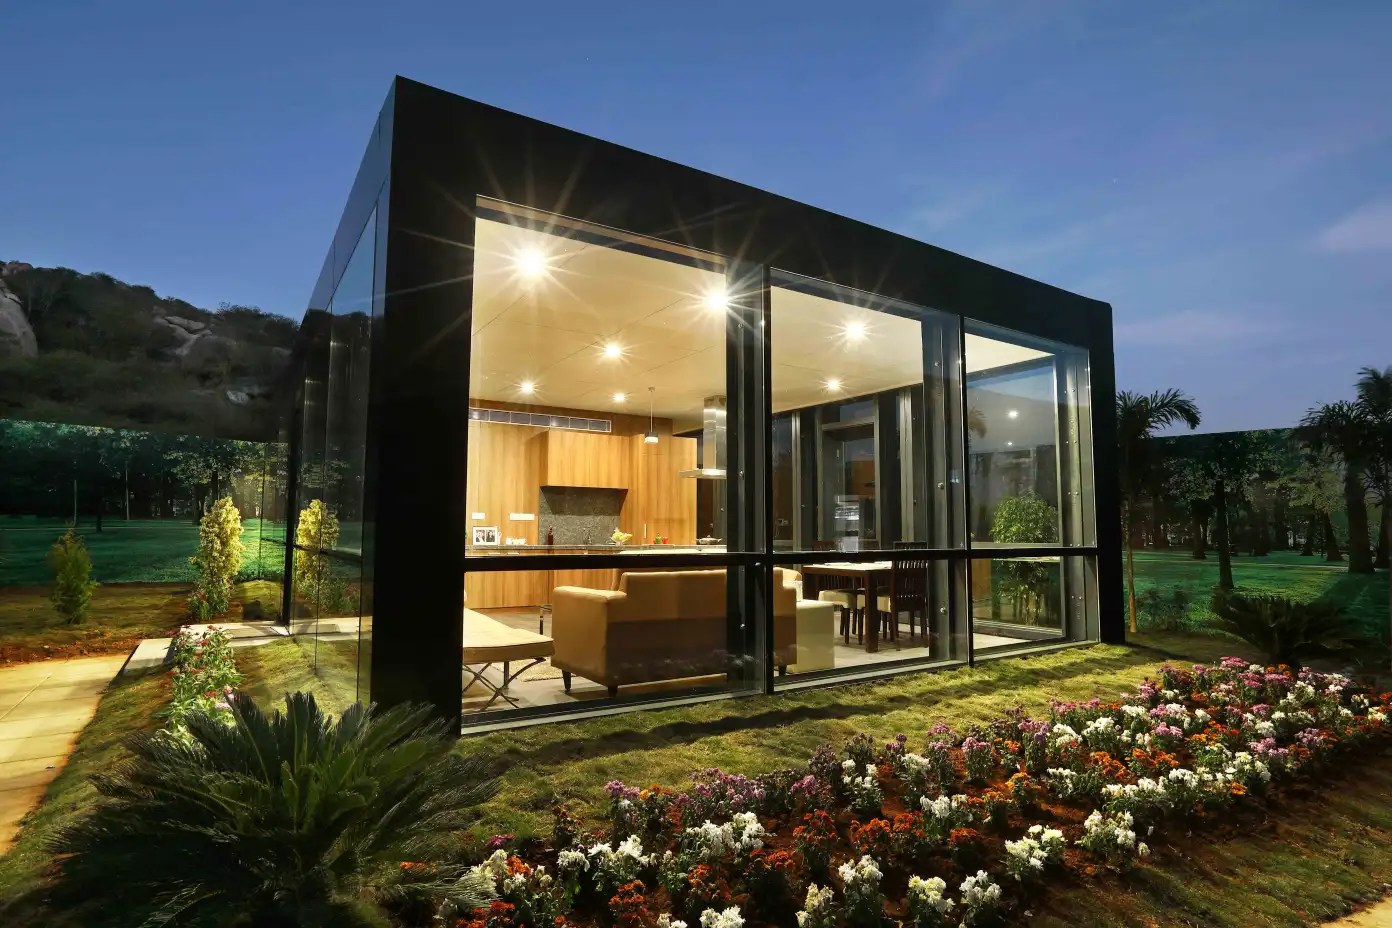 REVOLUTION PRECRAFTED is an idea to bring “Democratic Design” in real estate